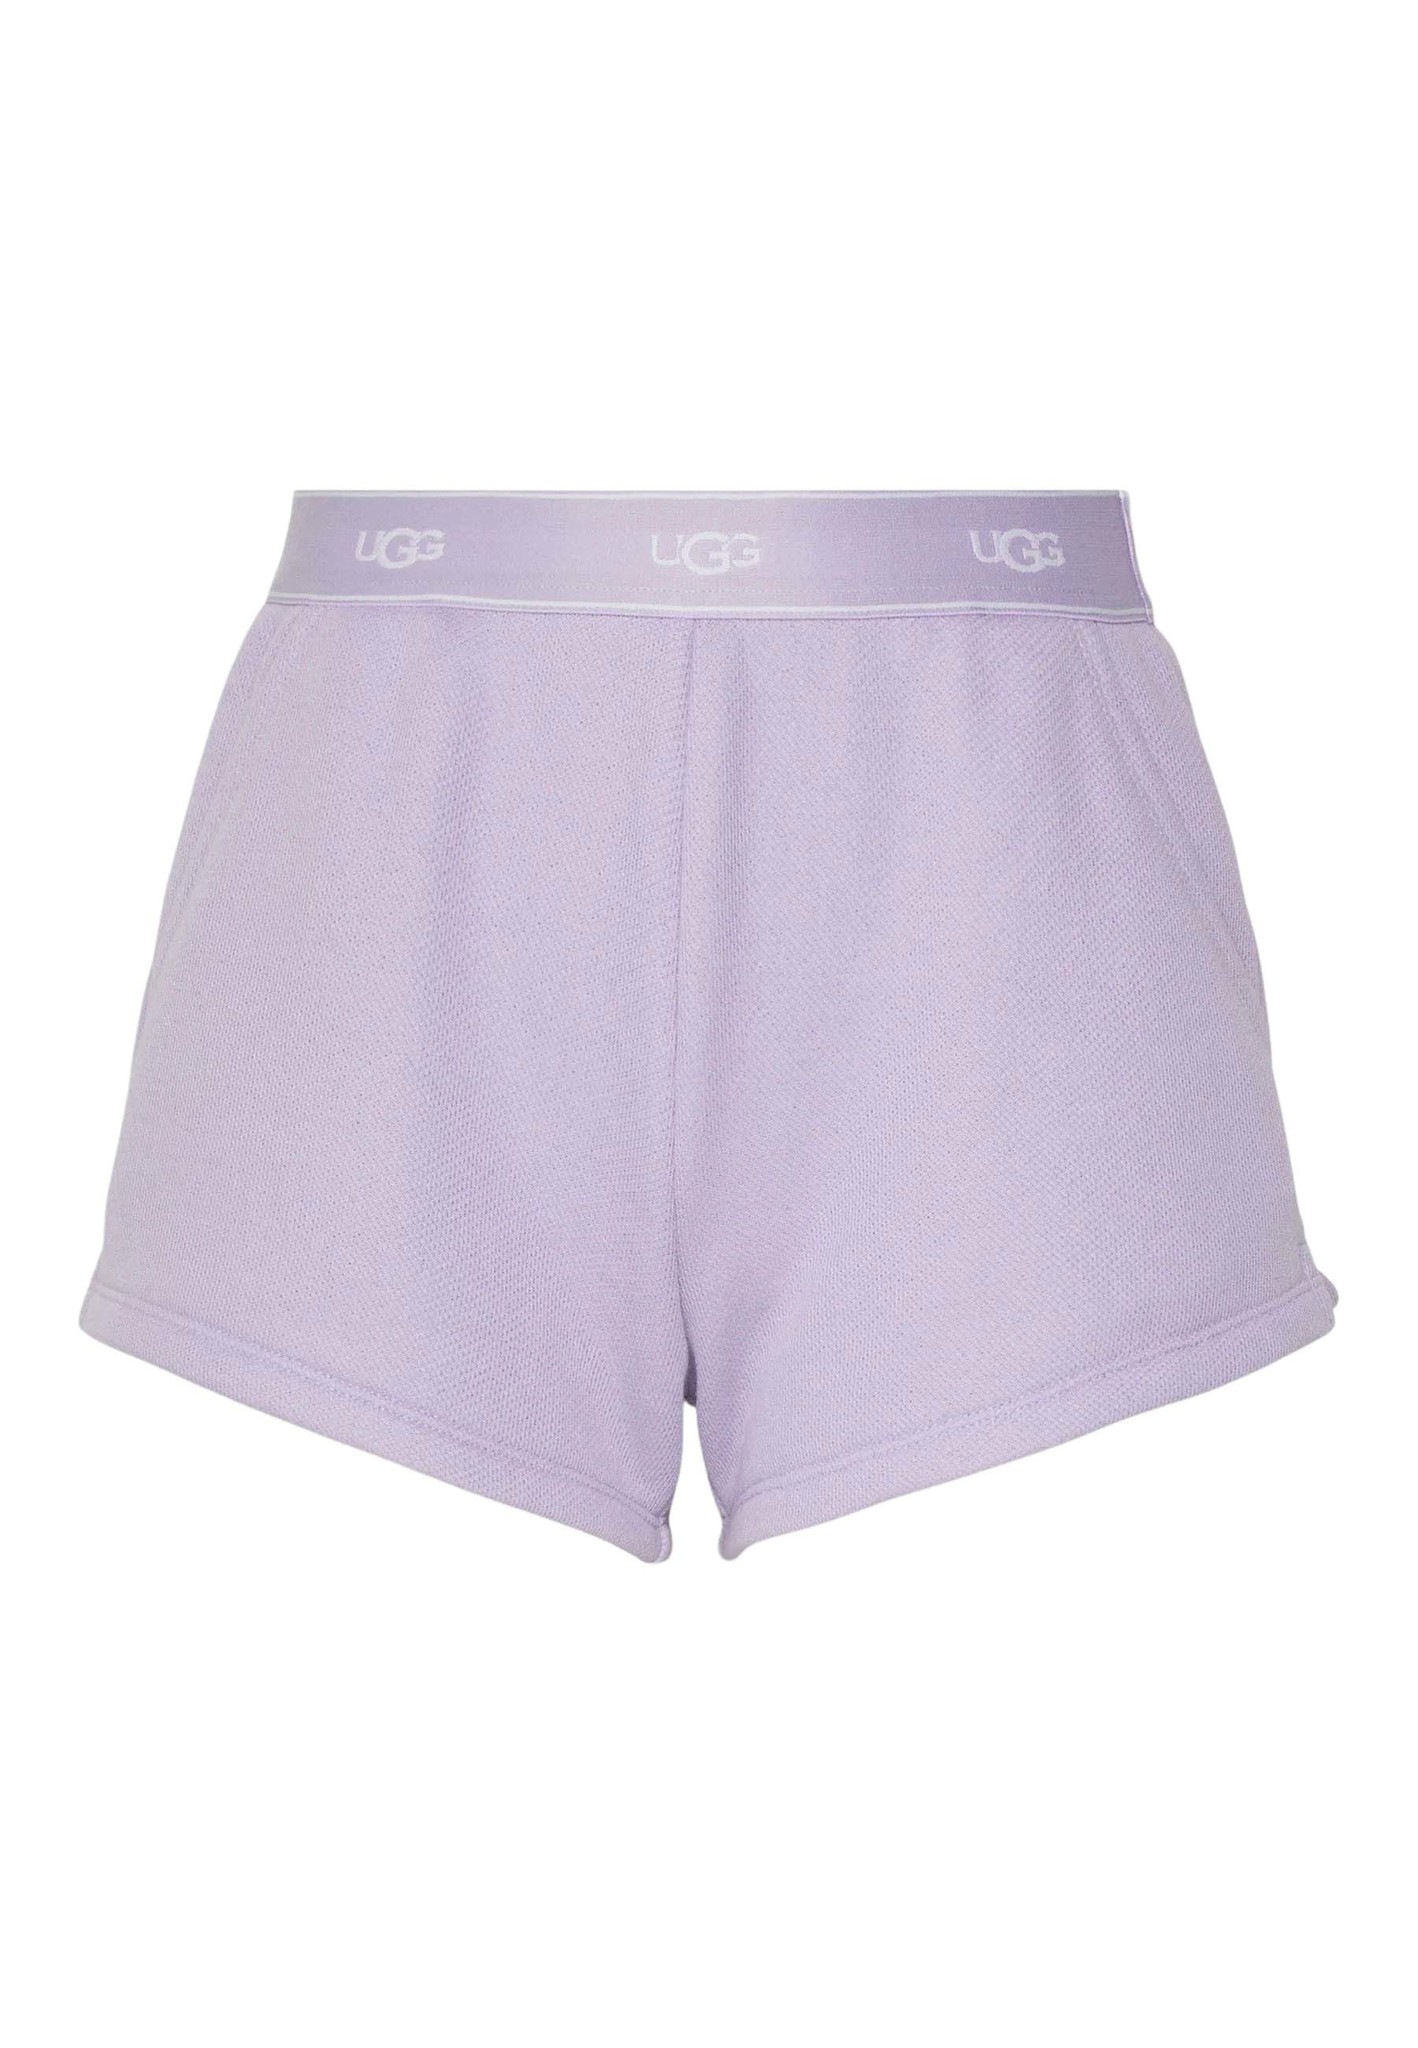 Ugg Albin shorts lila Dames maat L